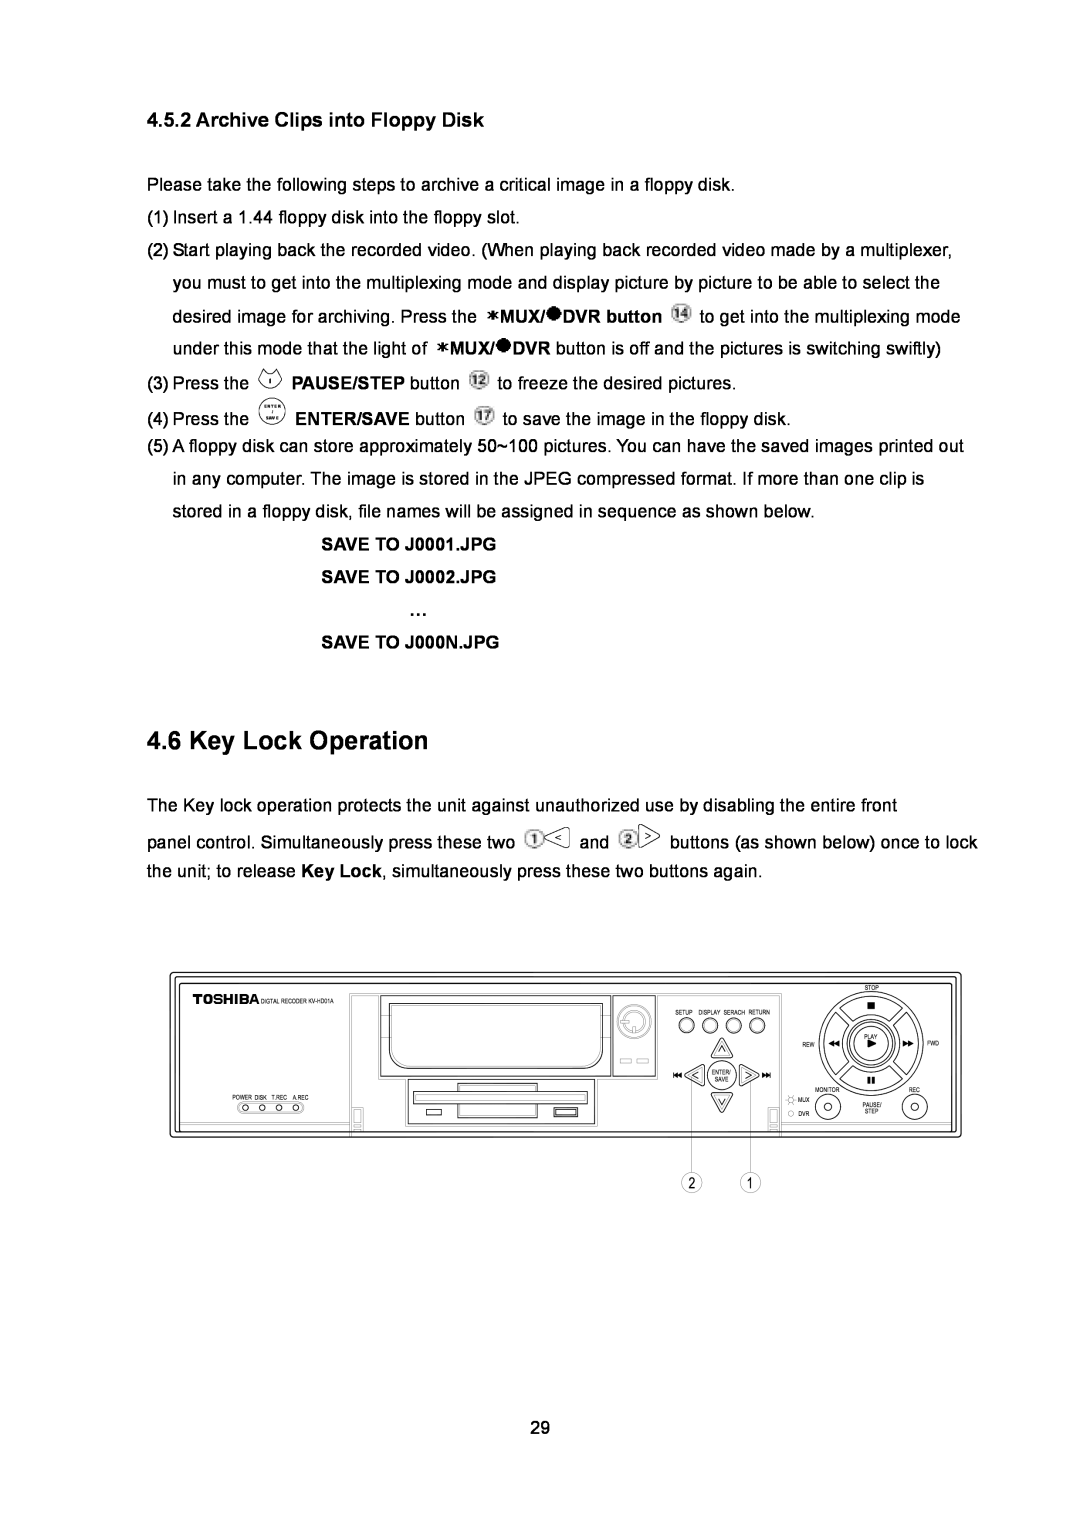 Toshiba KV-HD01A manual Key Lock Operation, Archive Clips into Floppy Disk 